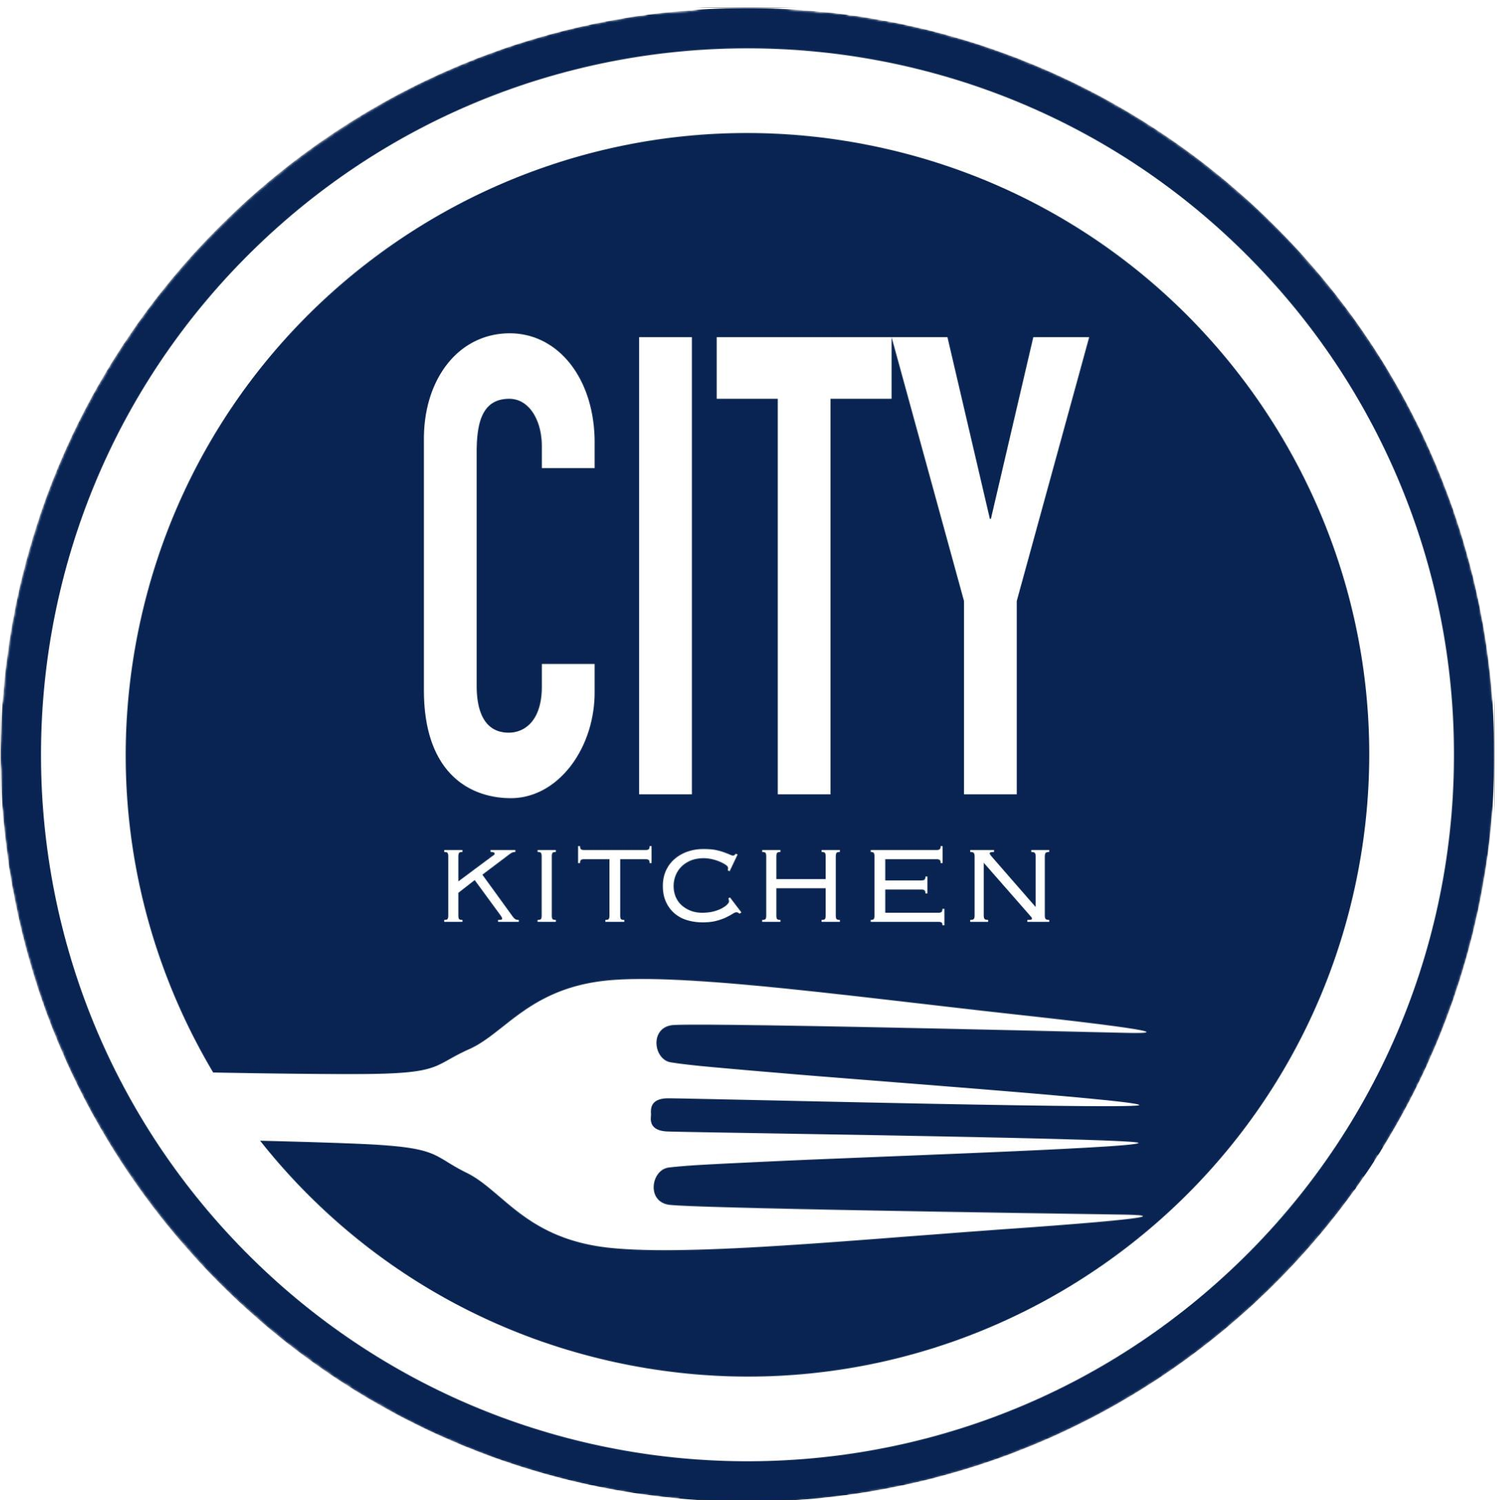 City Kitchen